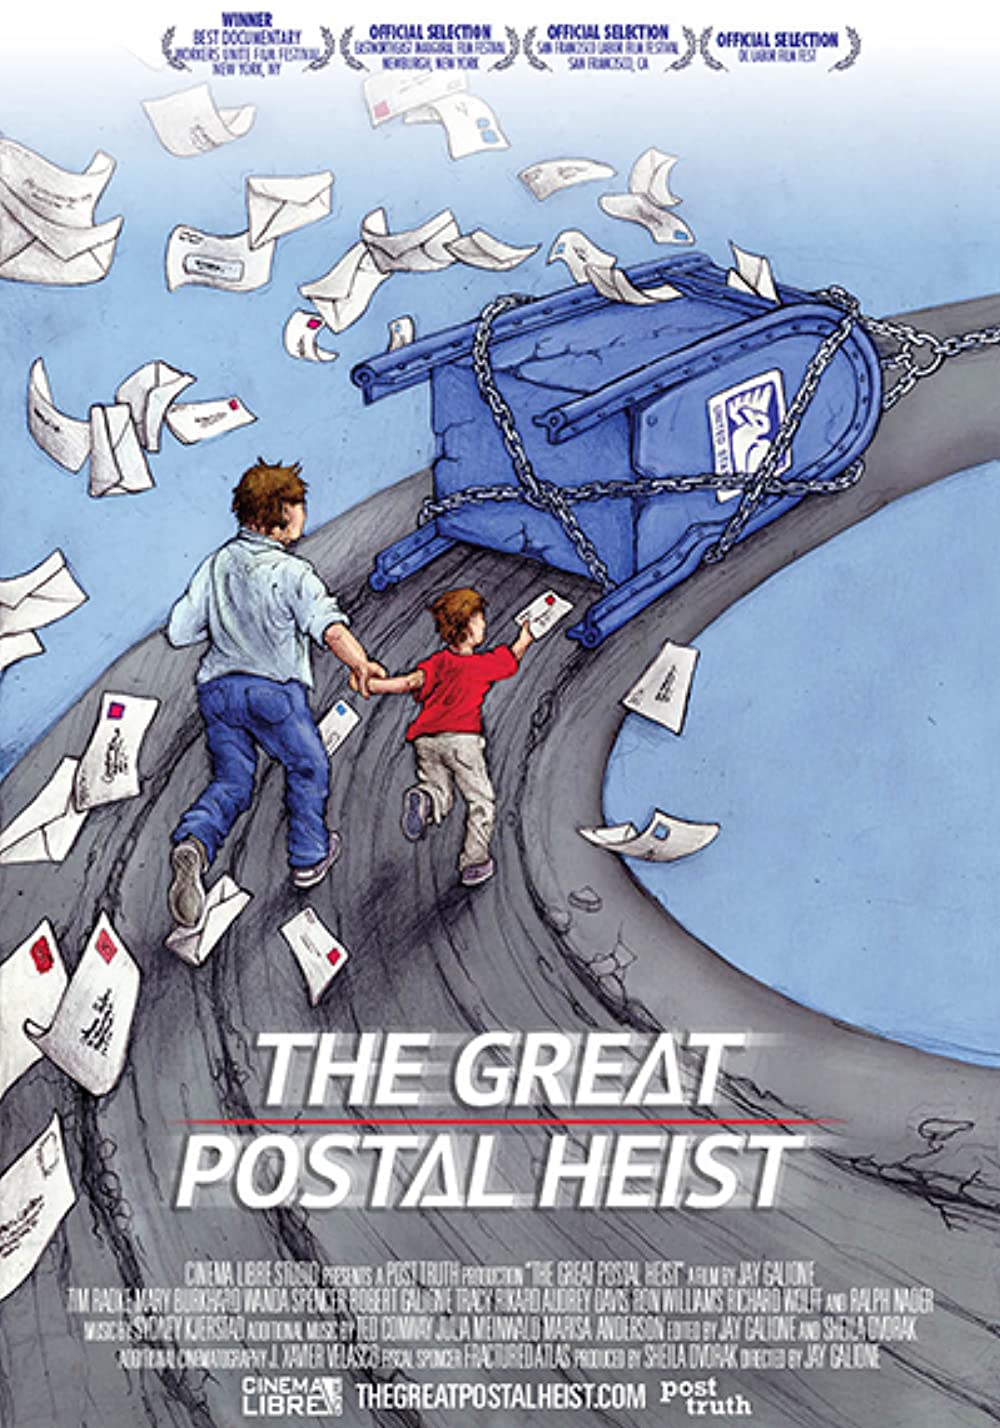 The Great Postal Heist